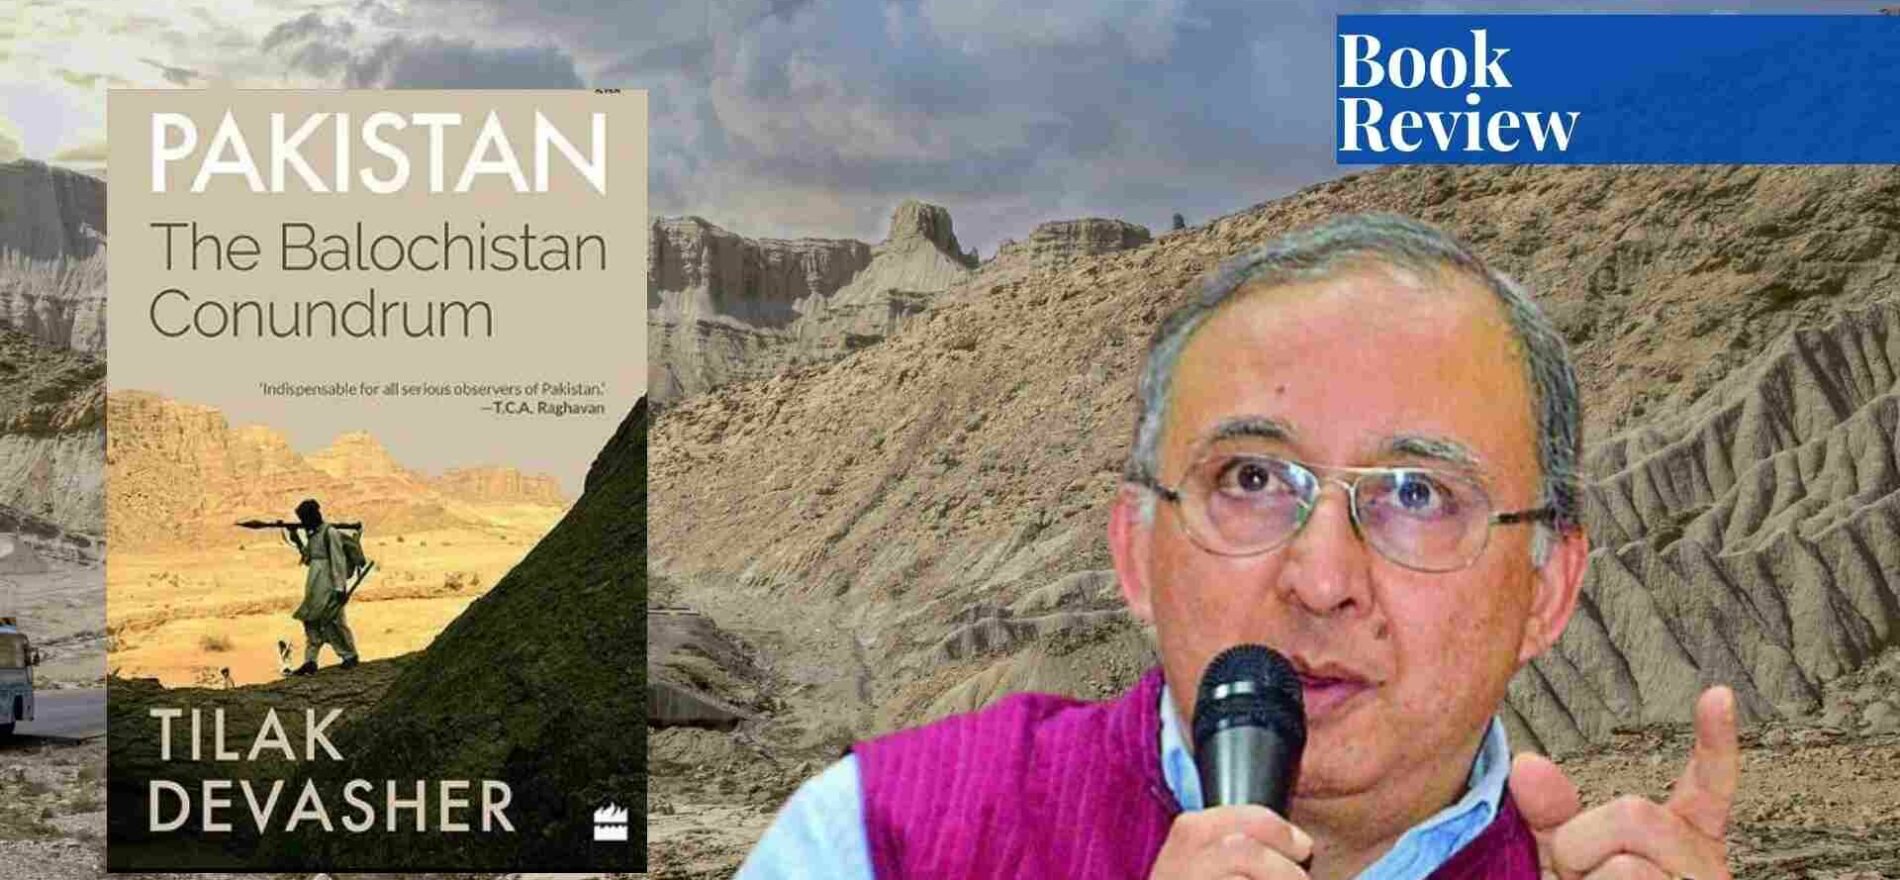 Pakistan-The Balochistan Conundrum, a book by Tilak Devasher